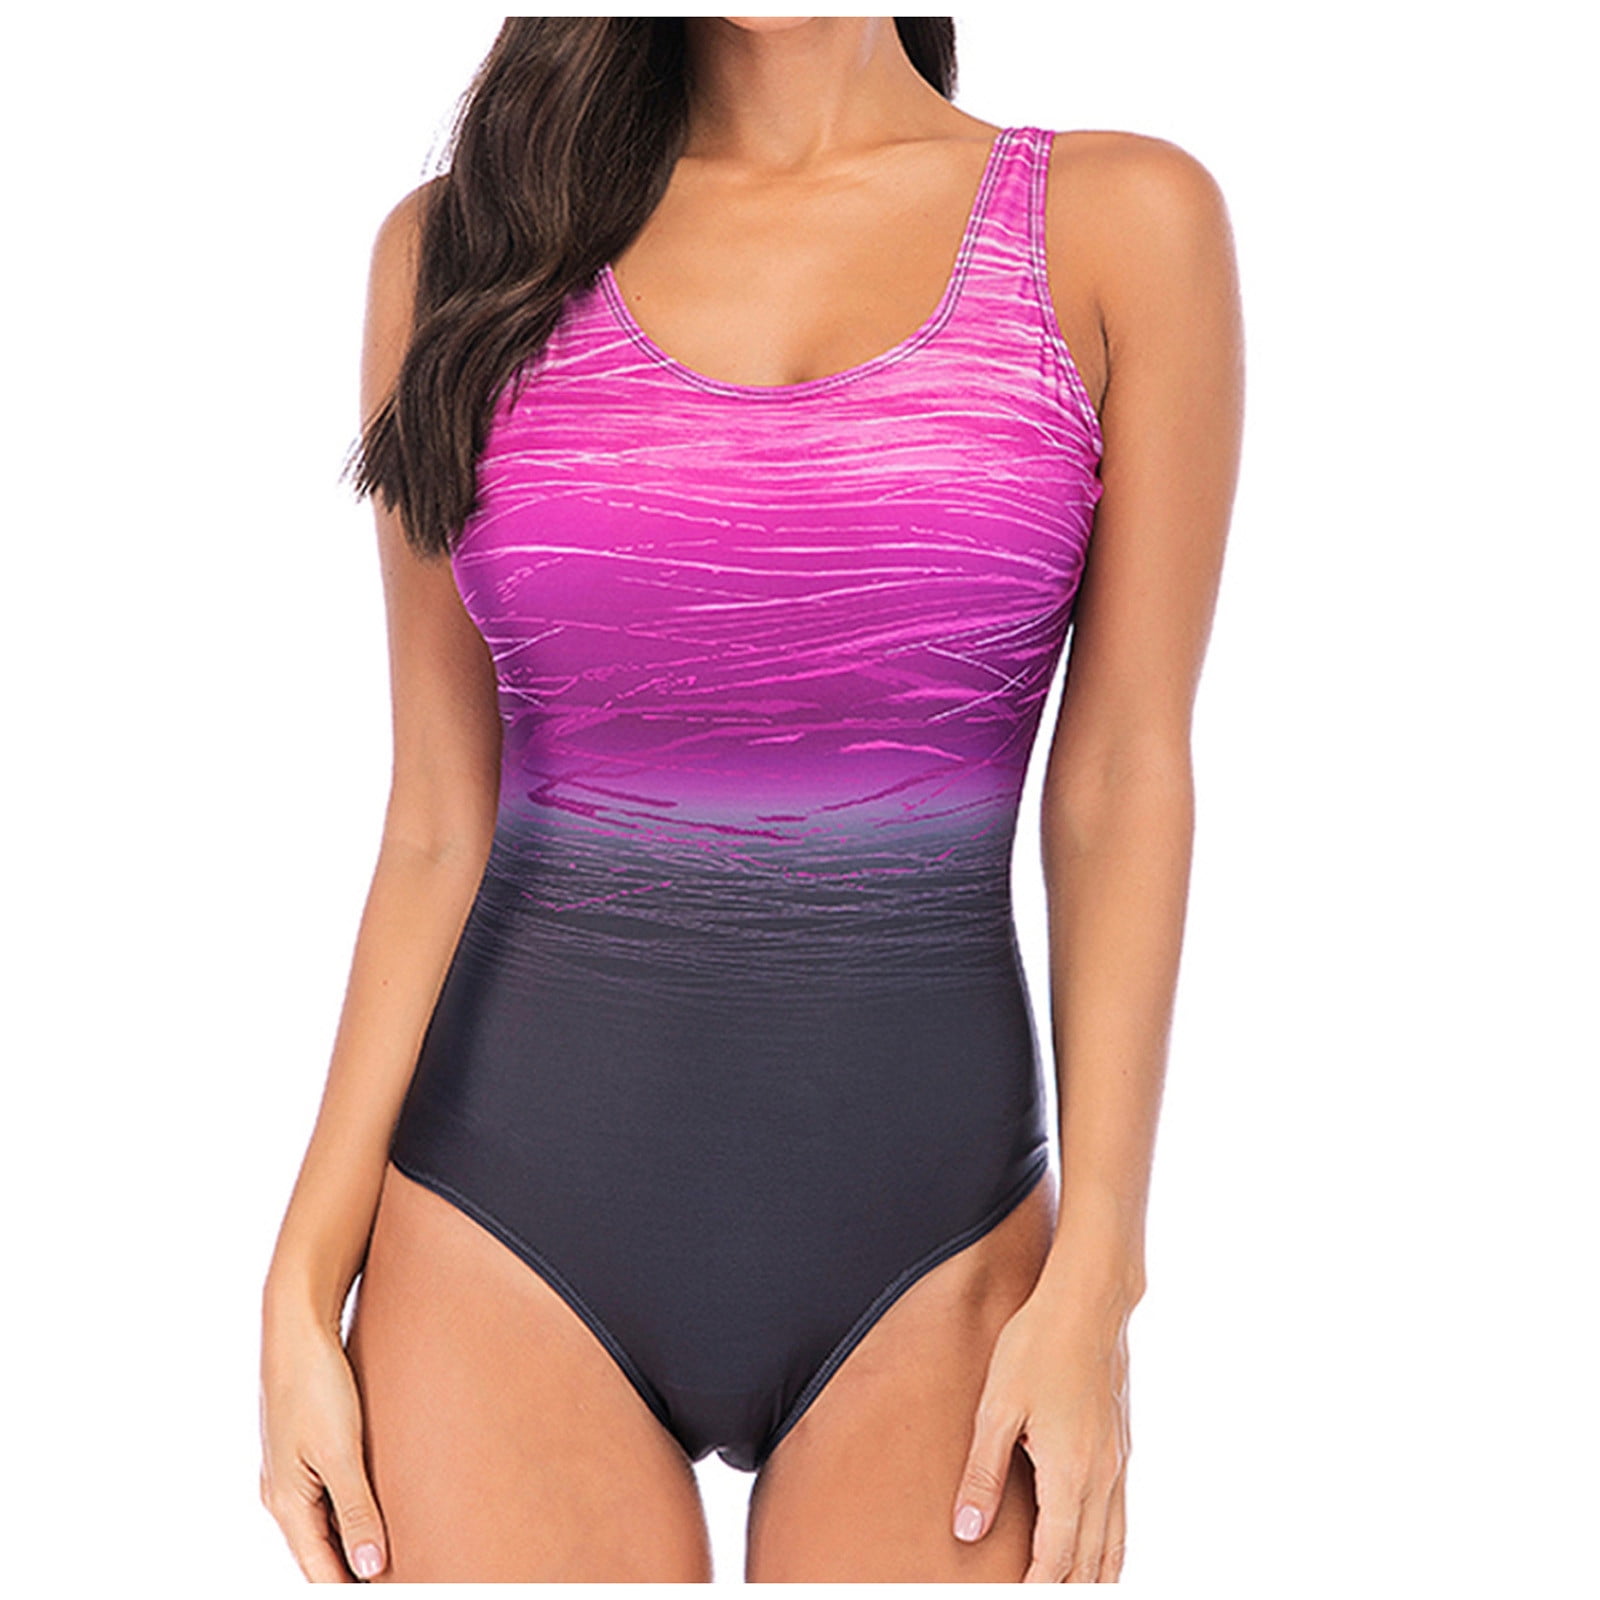 kpoplk Bathing Suits For Women Tummy Control,Women Lace up Bikini Swimsuit  Strappy 2 Piece Bathing Suit(Purple,S) 